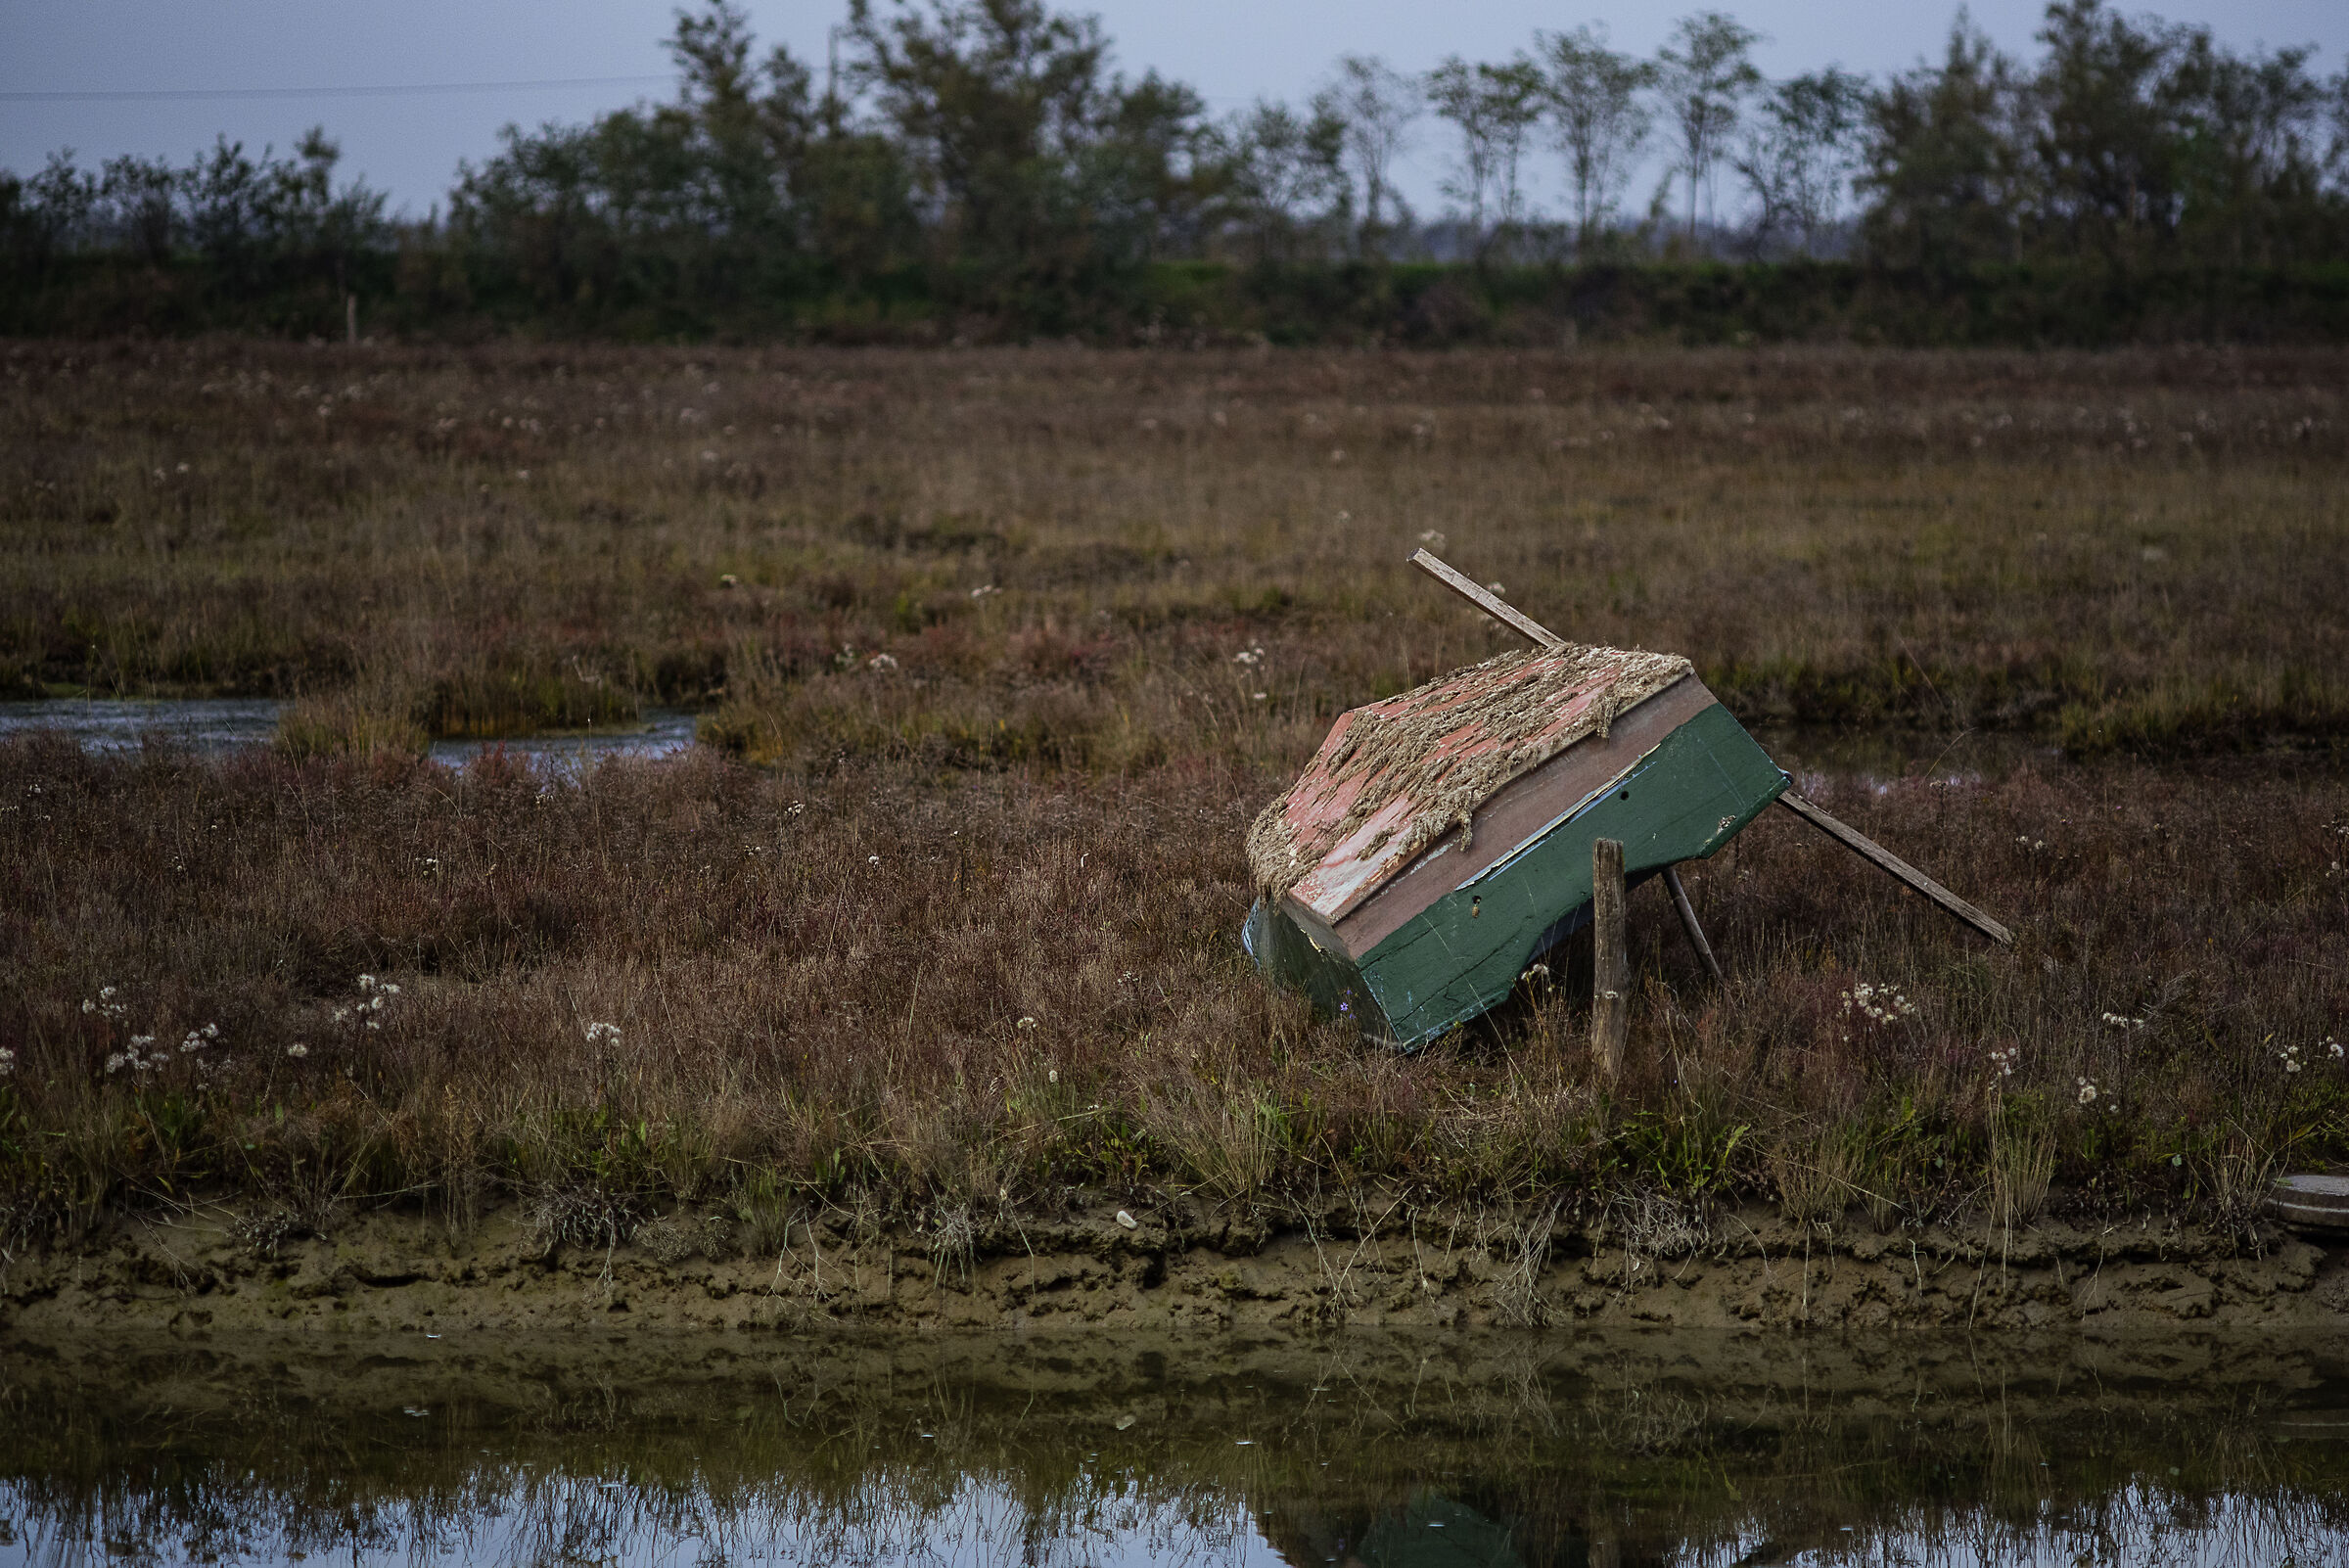 Abandoned boat among the salicornies...